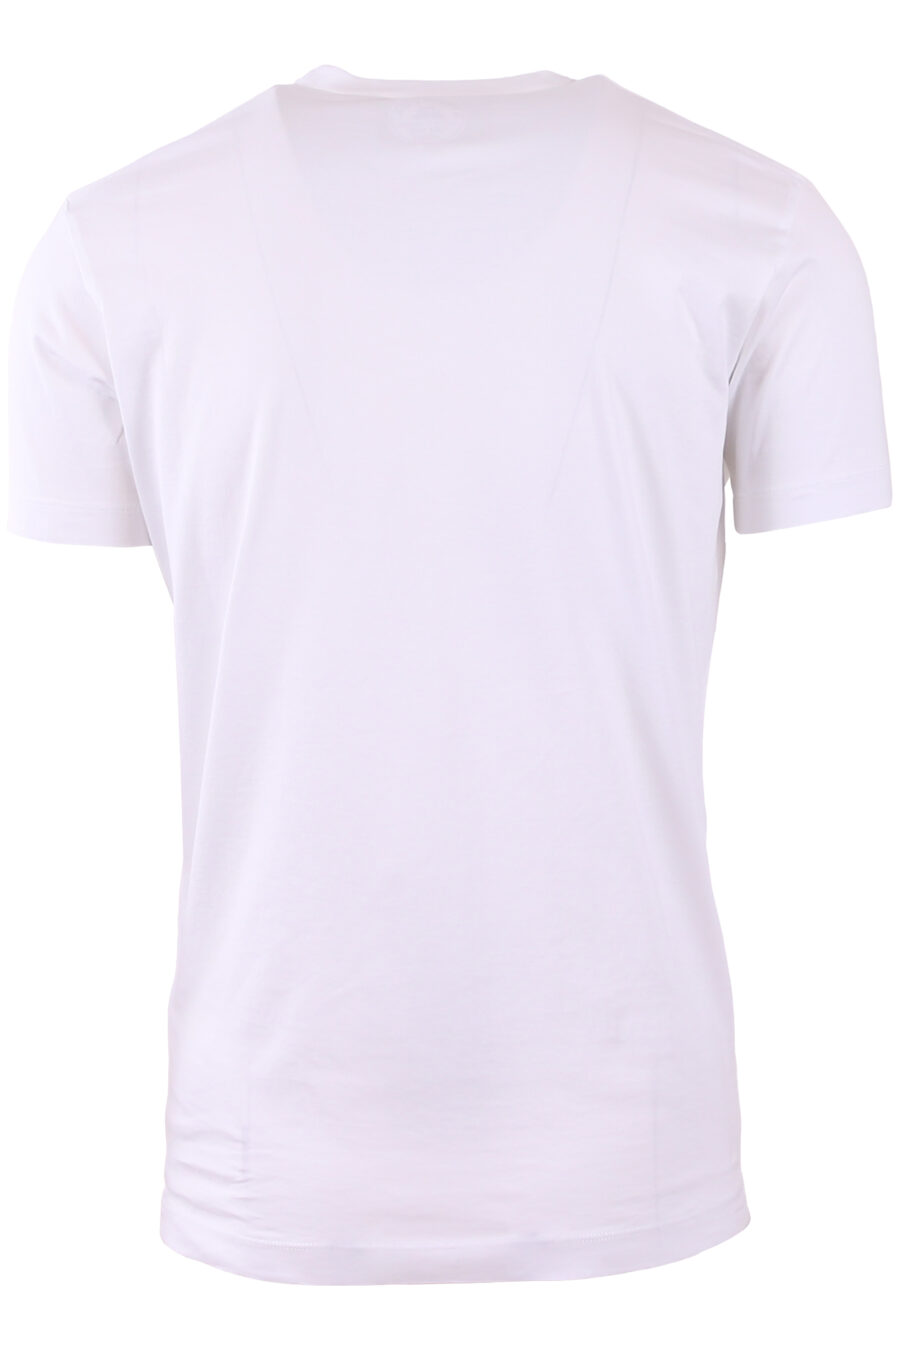 Camiseta blanca maxilogo "dsquared2 milano" - IMG 3571 1